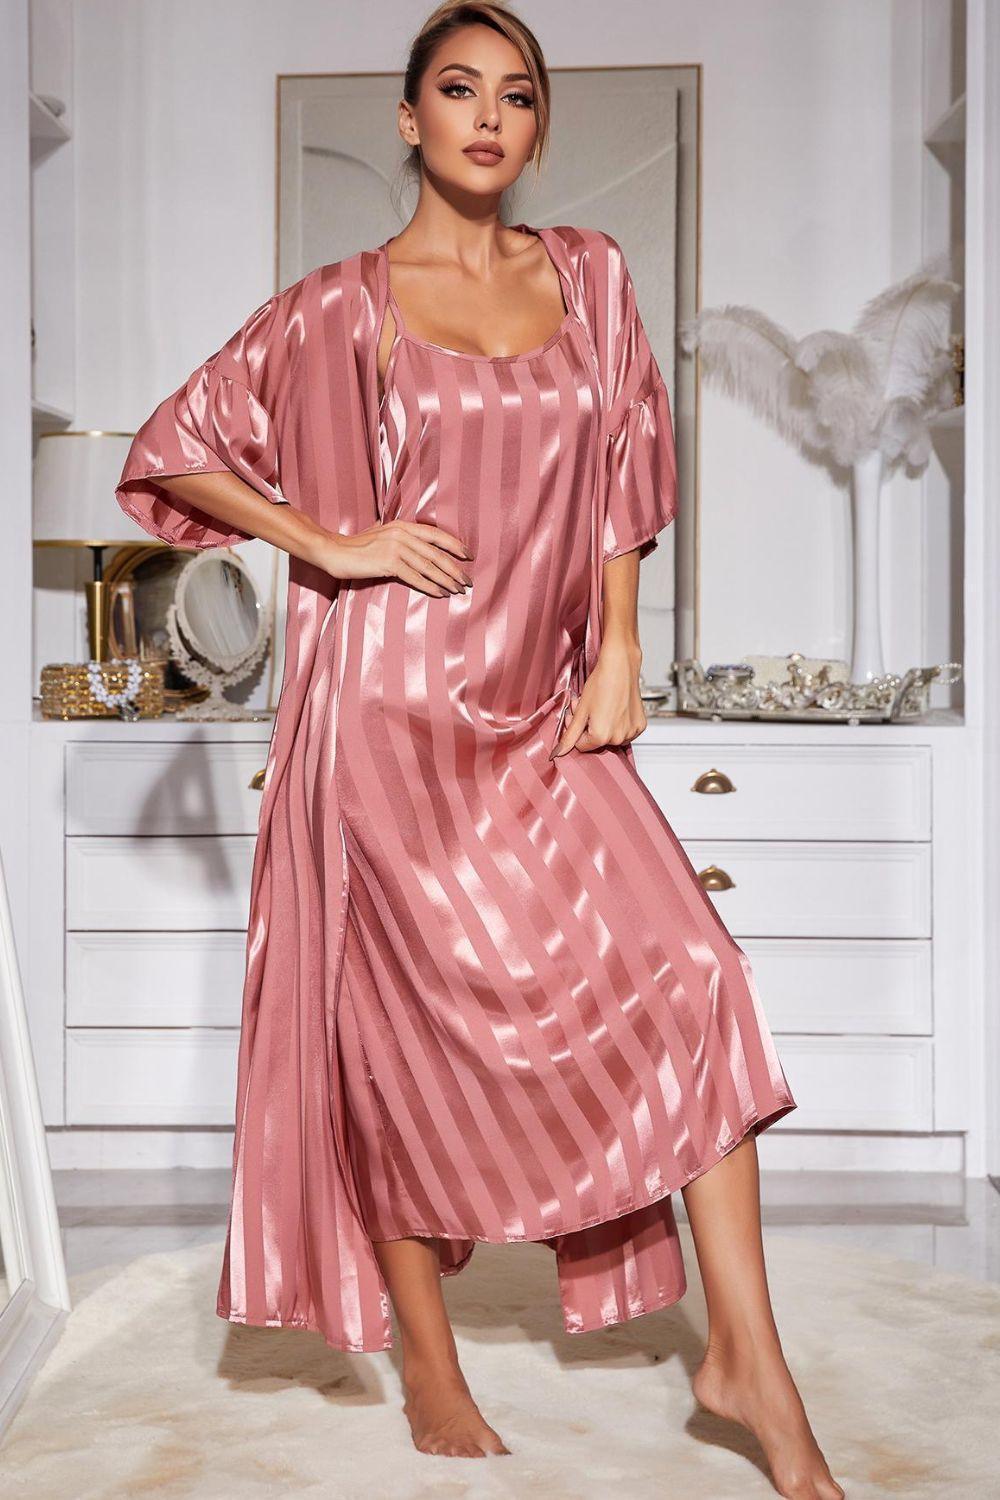 Striped Scoop Neck Cami Dress And Robe Set - MXSTUDIO.COM